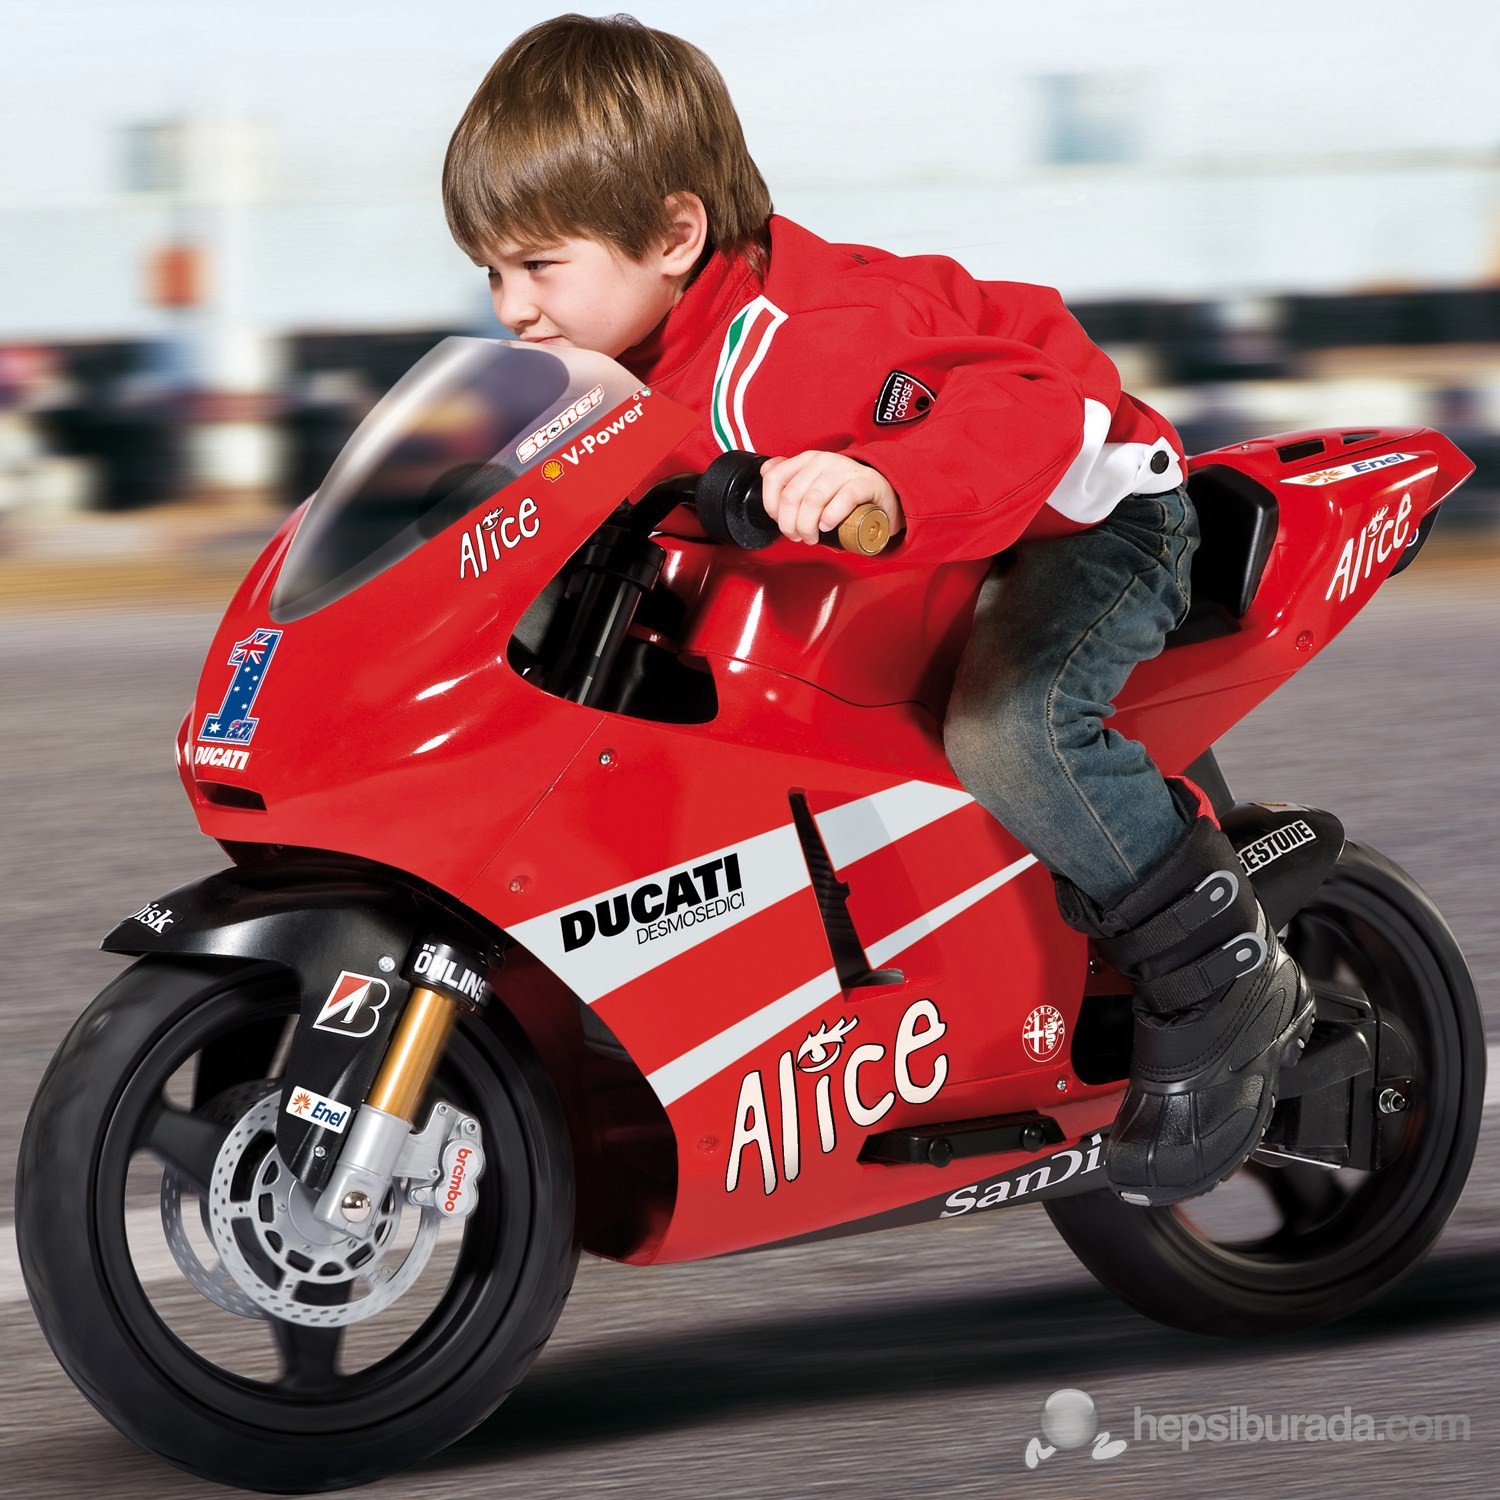 3 до 6 лет можно. Мотоцикл Дукати Пег Перего. Электромотоцикл Peg Perego Ducati. Детский электромотоцикл Дукати. Электромотоцикл 9 Cento детский.